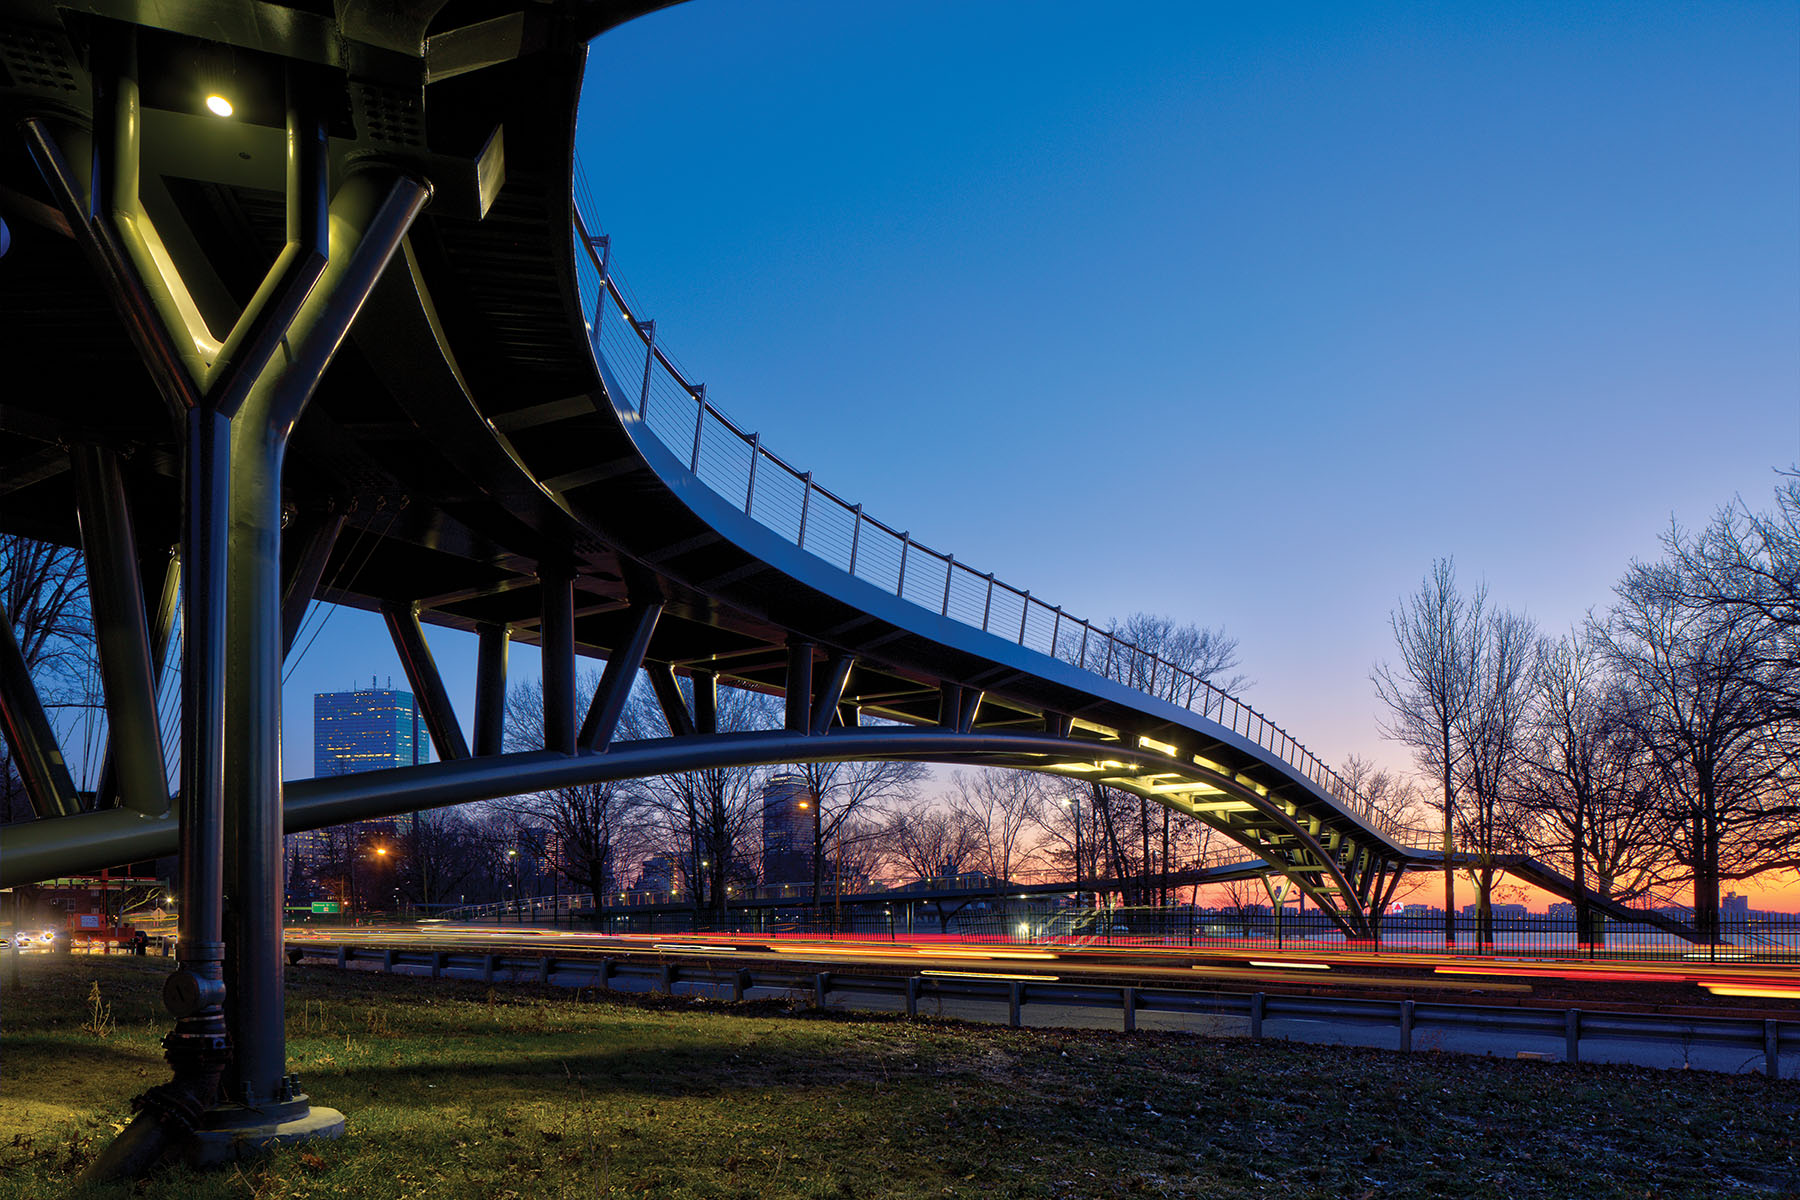 The Appleton bridge is seen at dusk in boston.